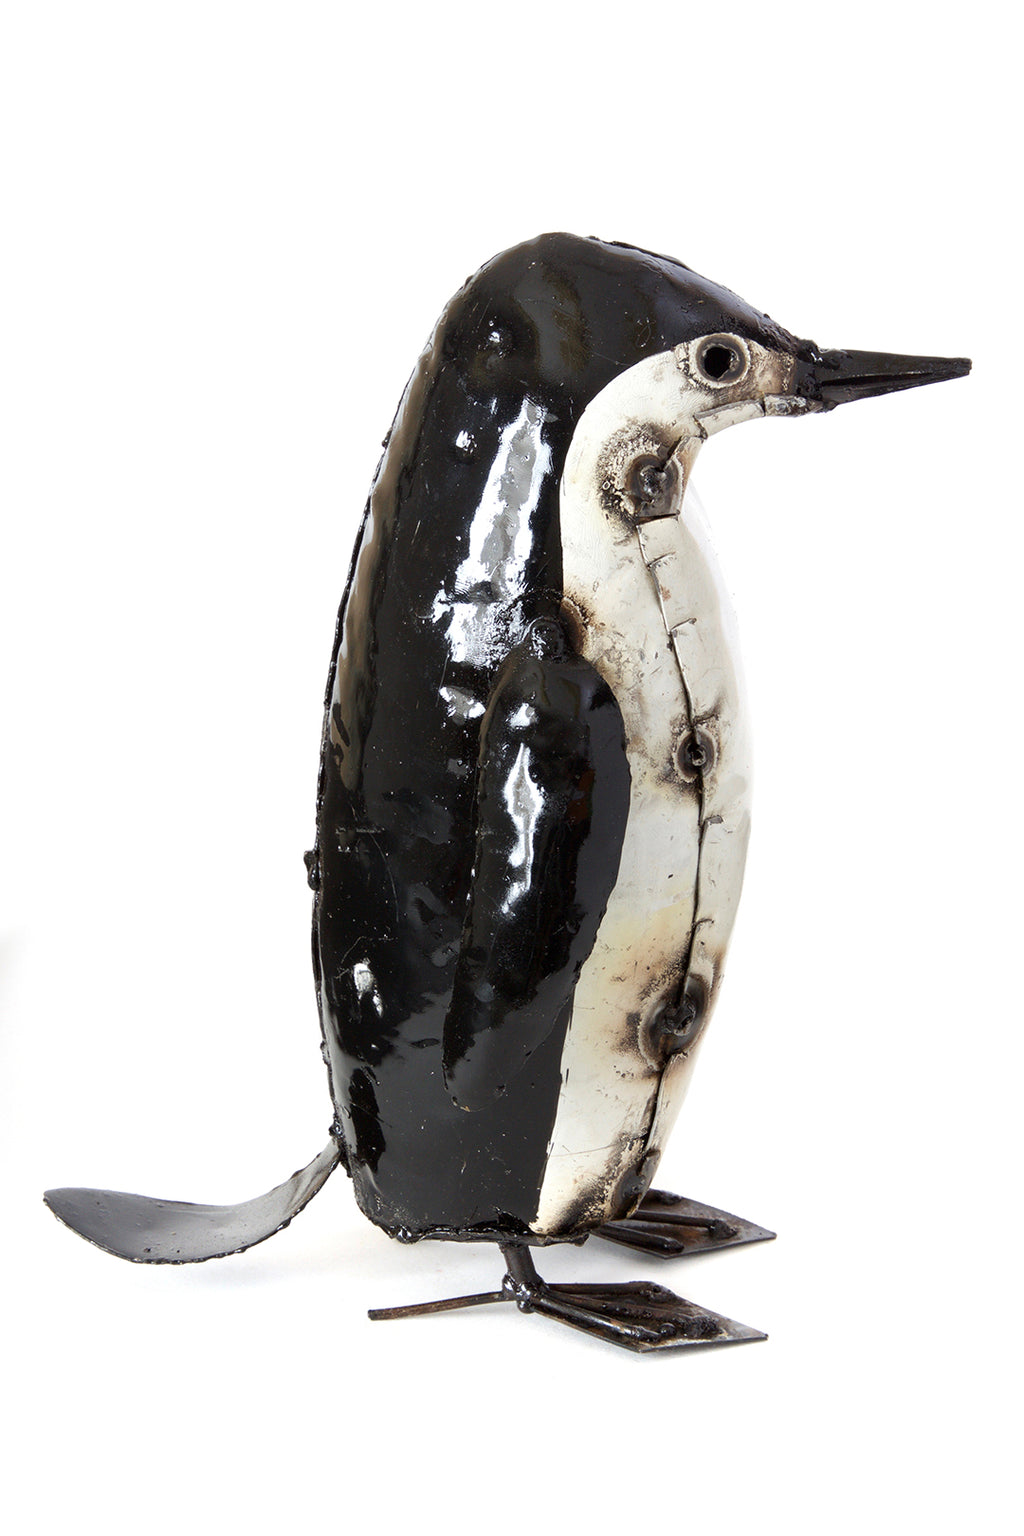 Recycled Metal Penguin Sculptures